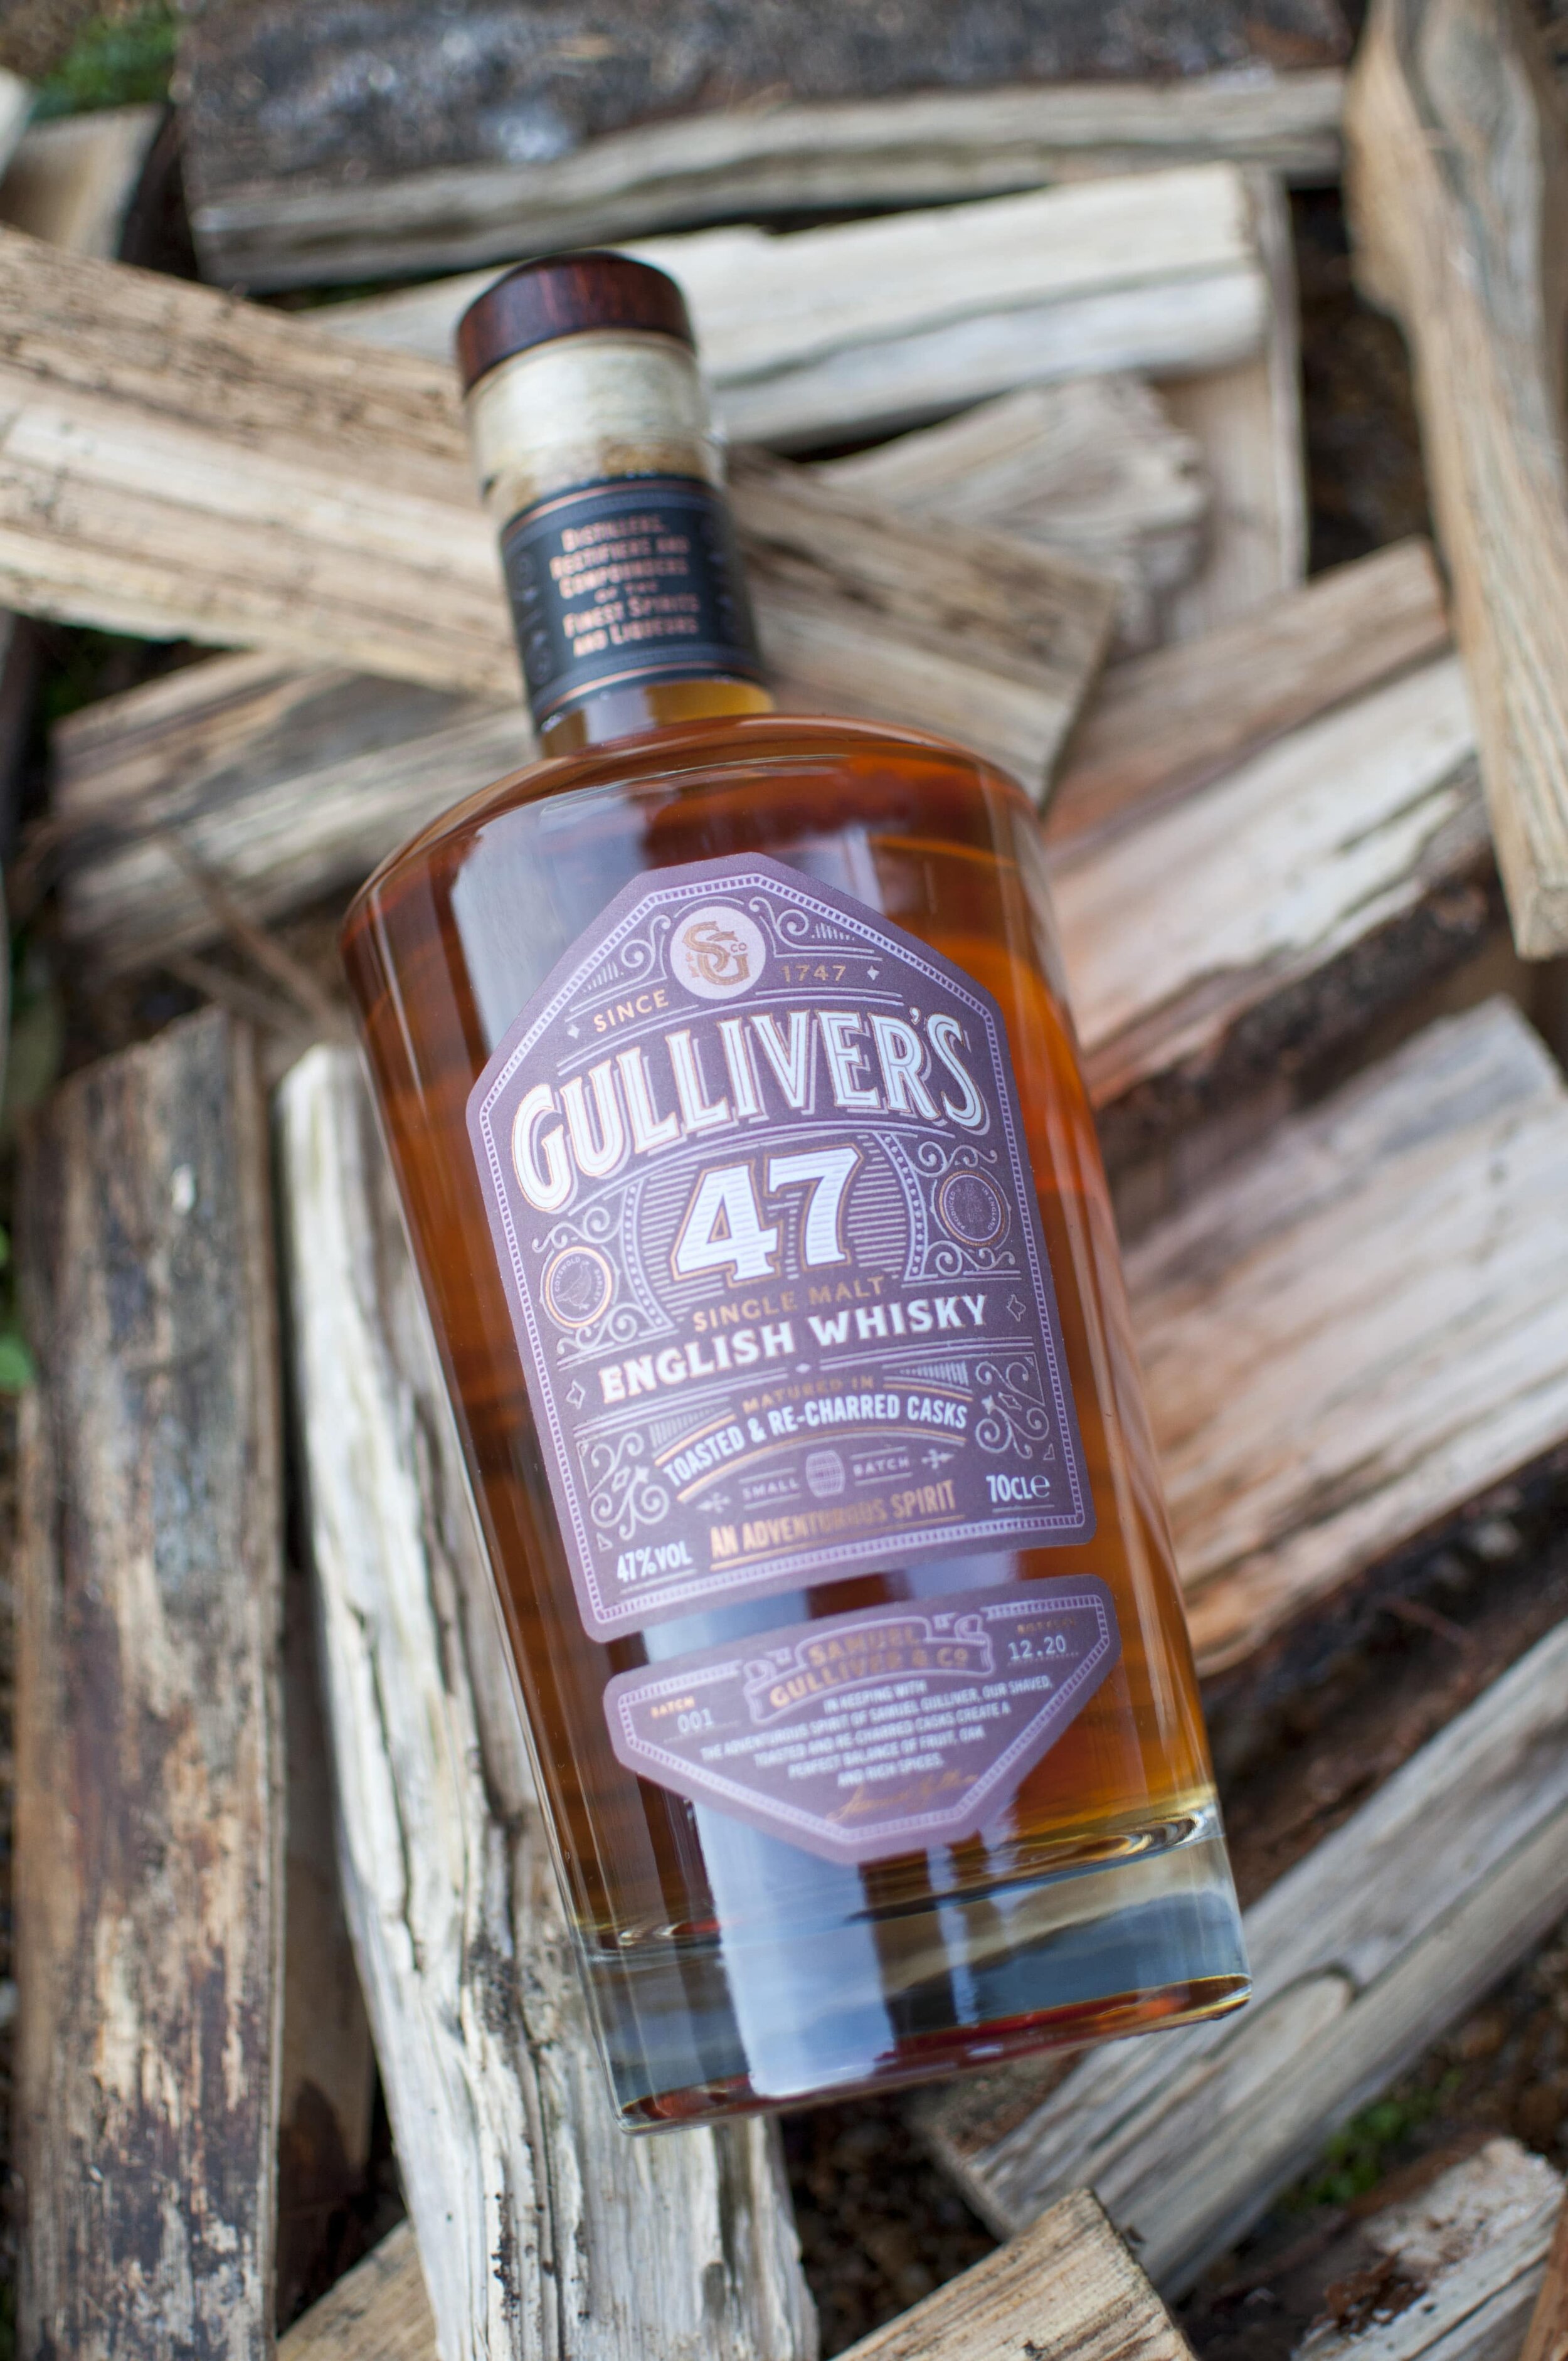 Gullivers Whisky